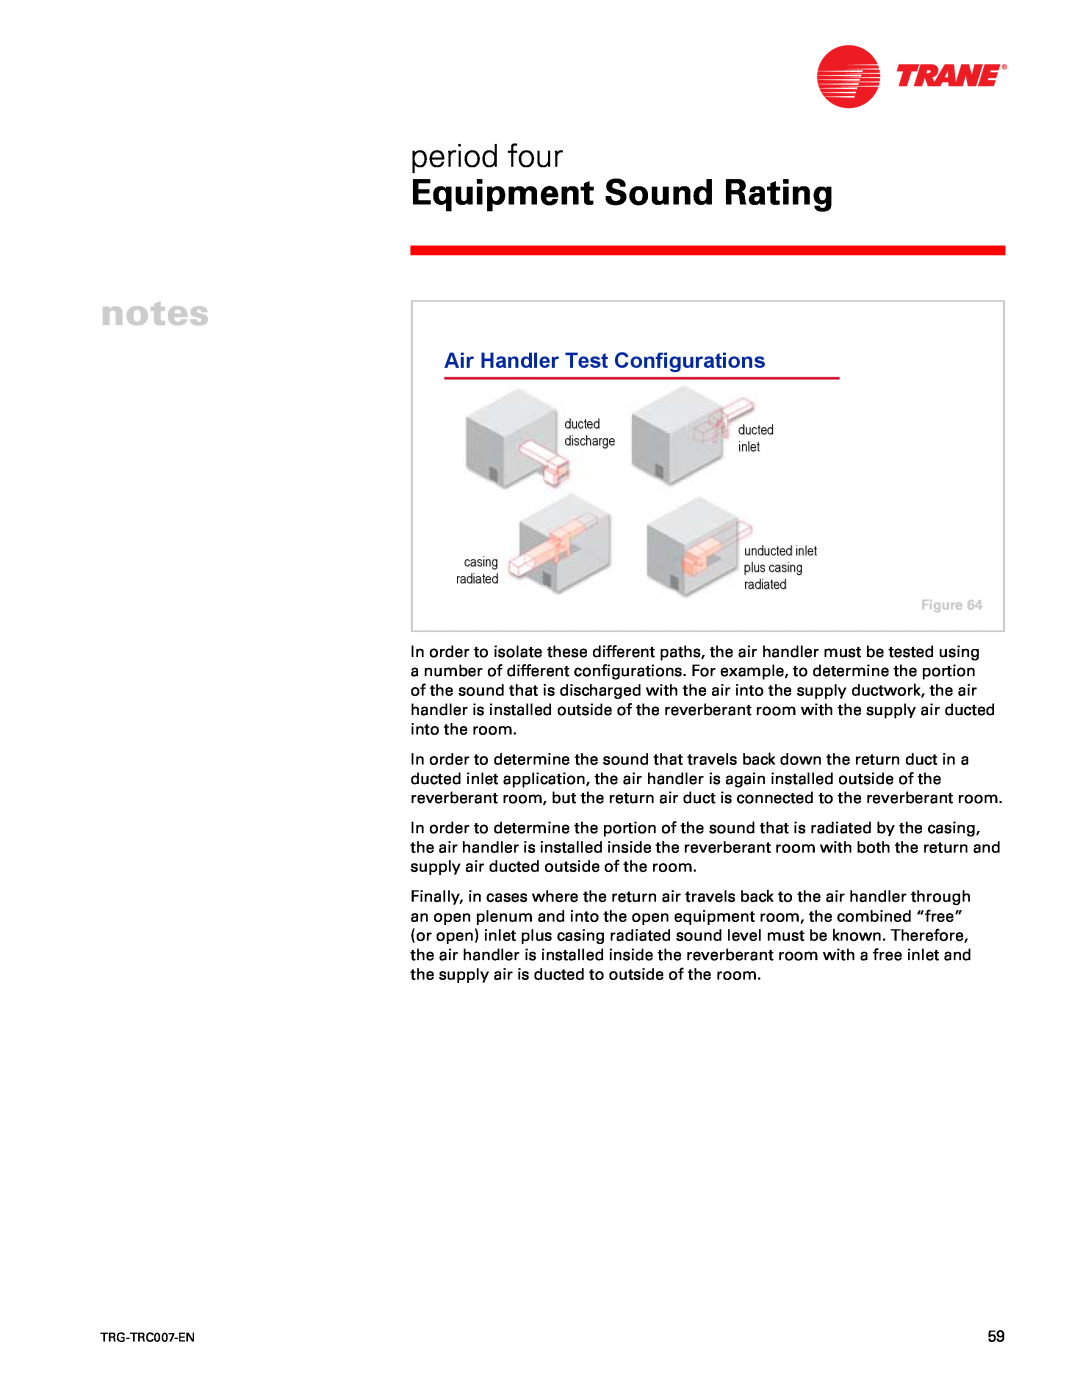 Trane TRG-TRC007-EN manual Air Handler Test Configurations, Equipment Sound Rating, period four 